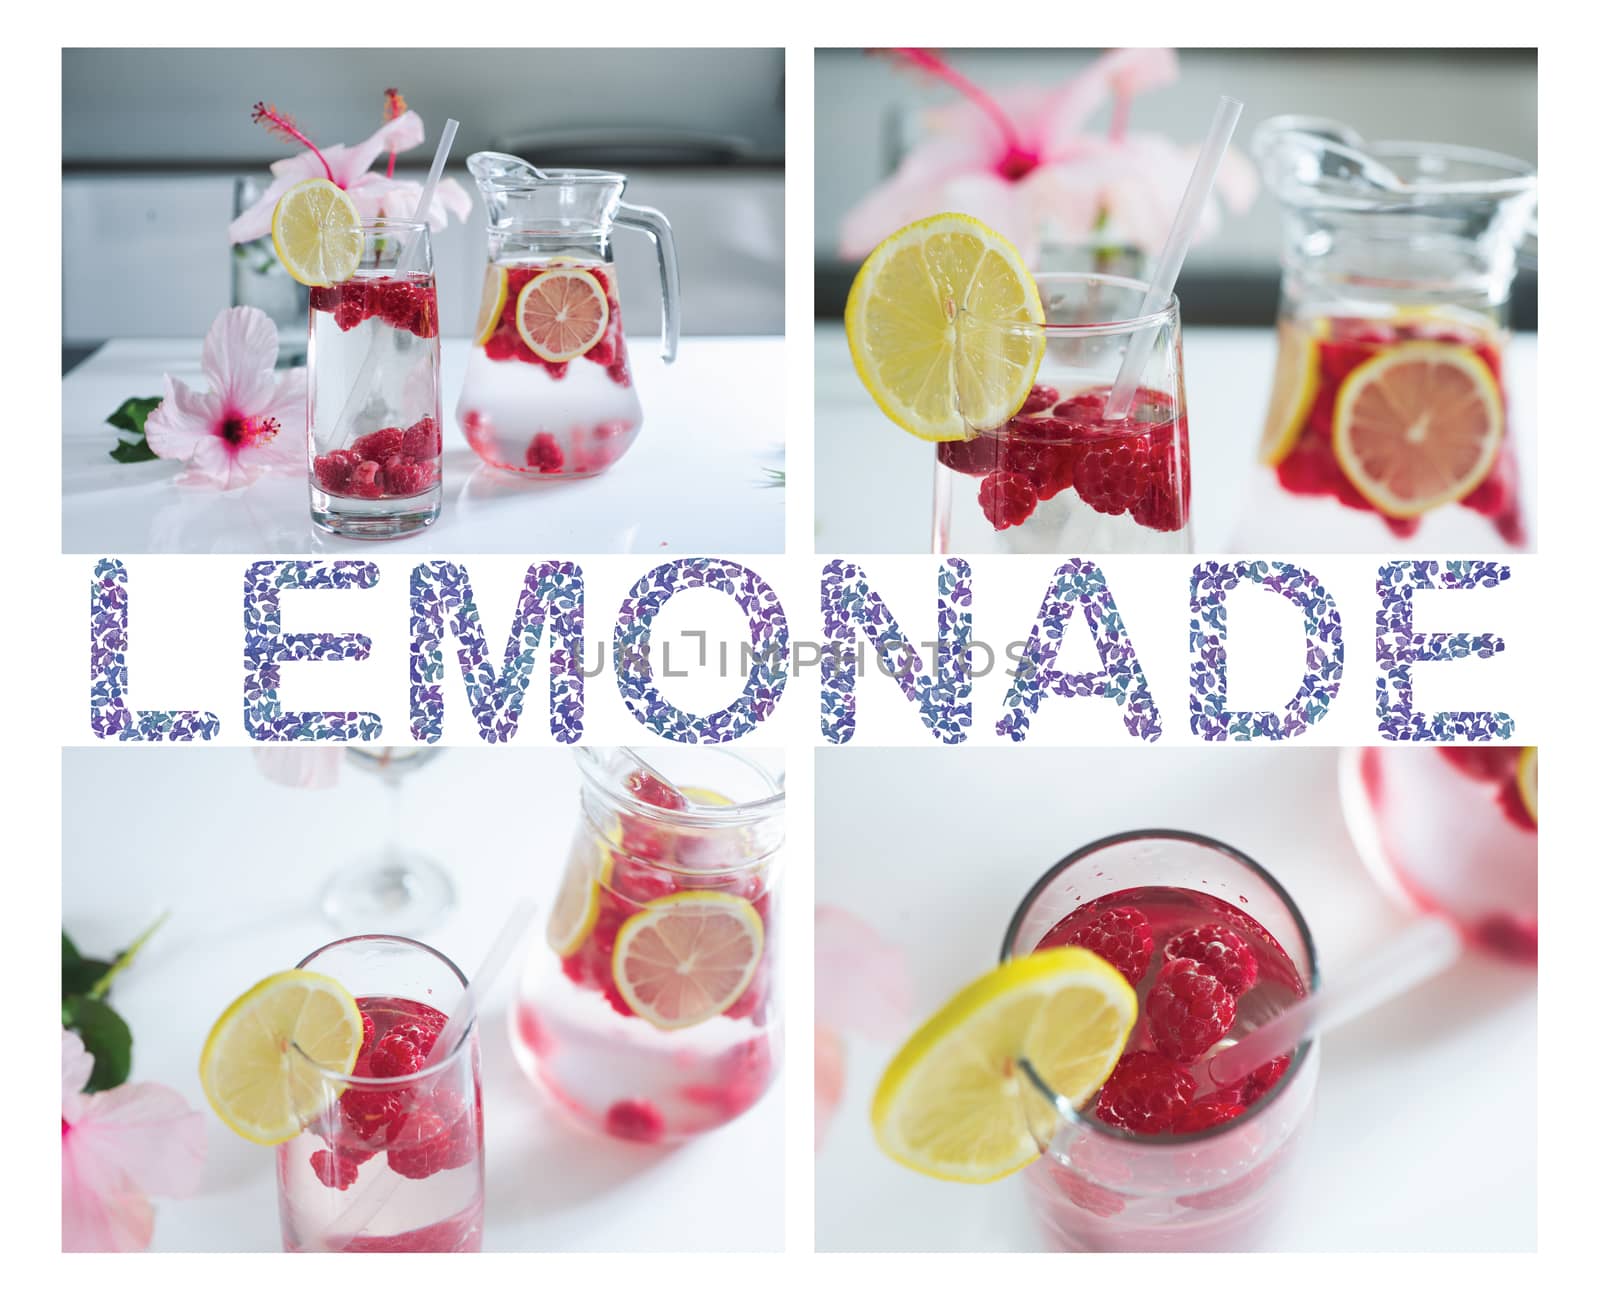 Tasty Lemonade with fresh raspberries and lemon slice on white background. Home made fresh Summer cold beverage.    